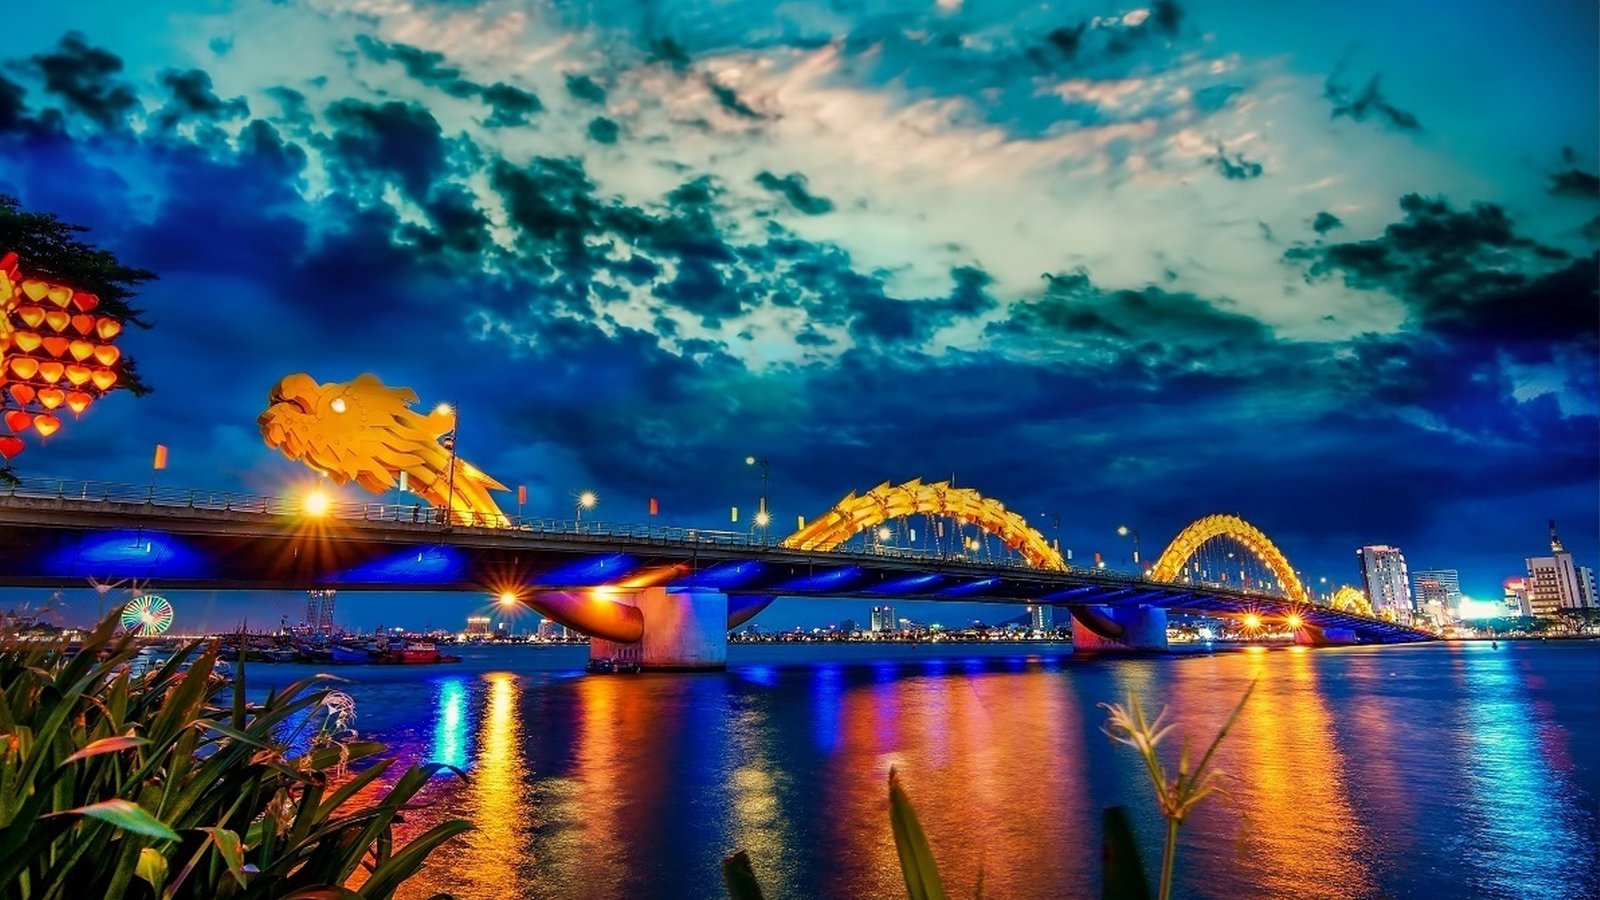 The beauty of the Han River Bridge